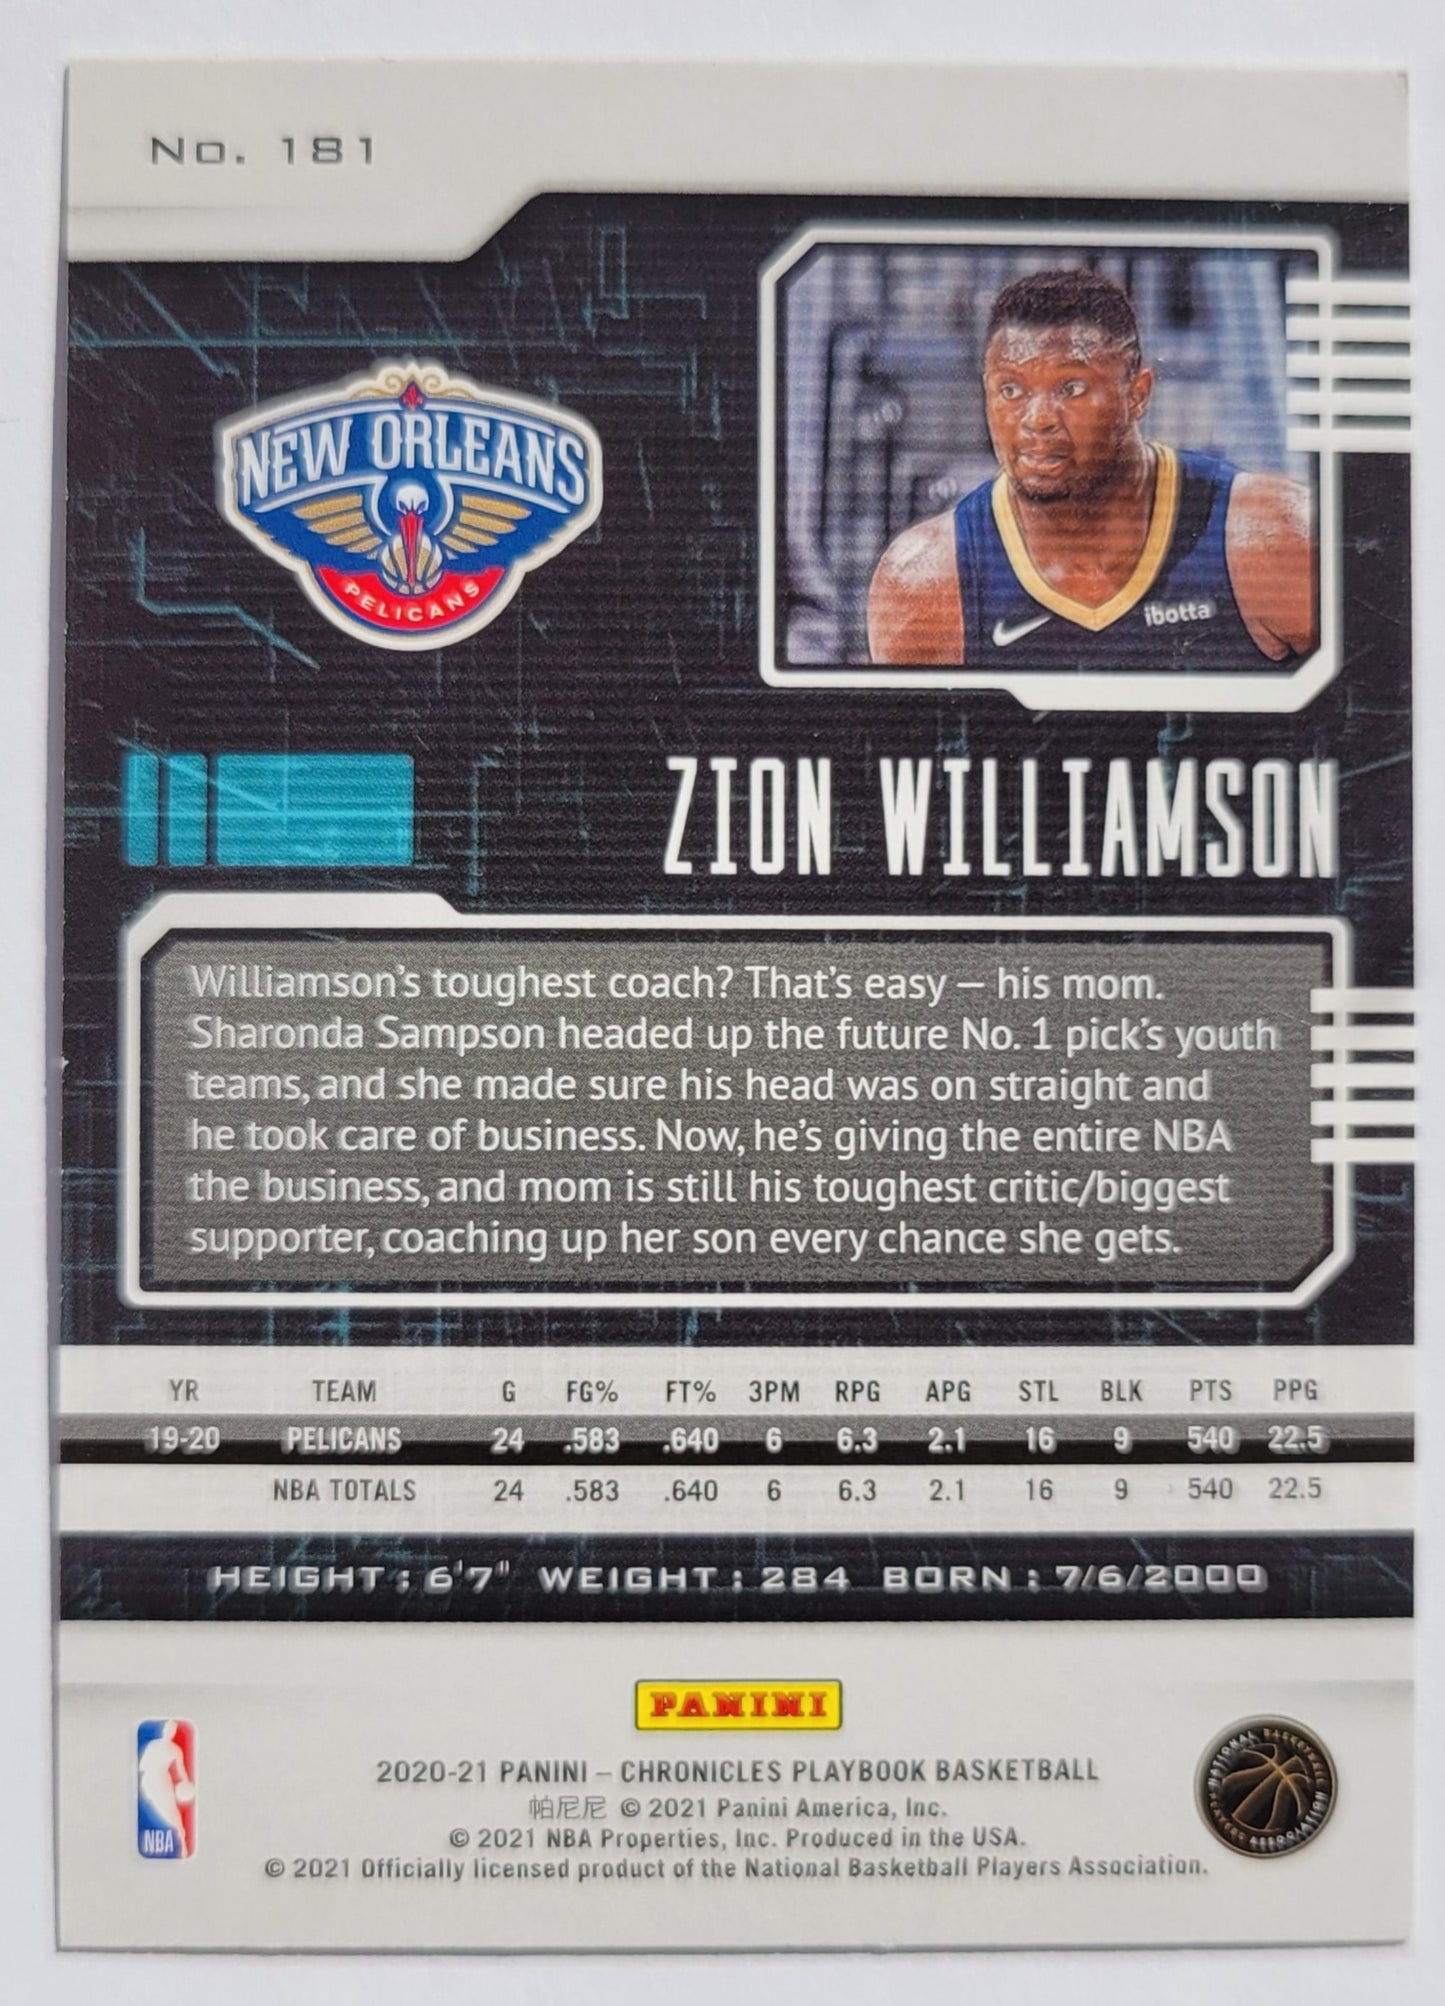 Zion Williamson - 2020-21 Panini Chronicles #181 Playbook